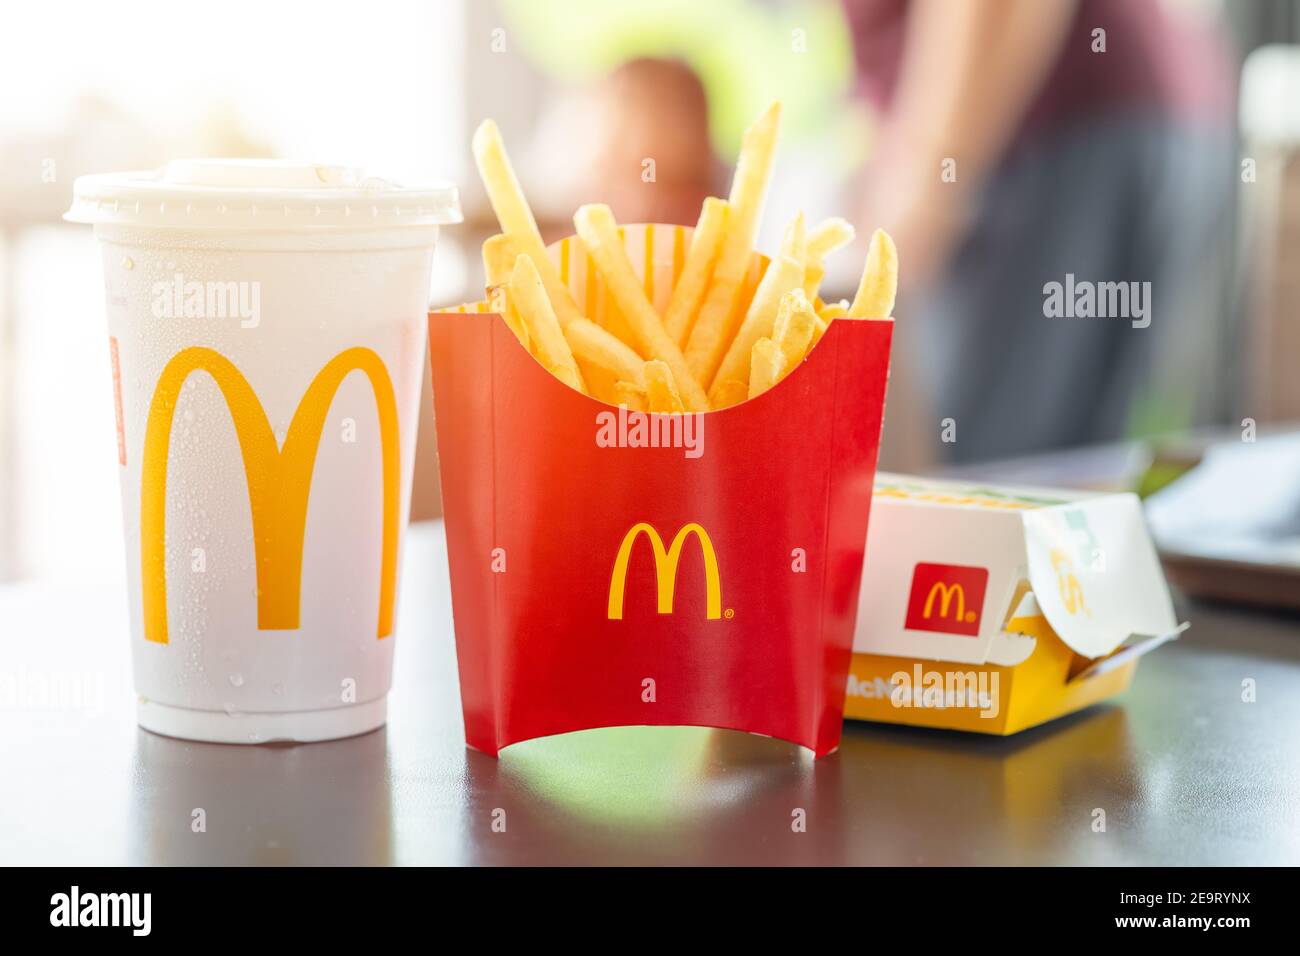 McDonald's Pommes frites Fastfood-Set, beliebteste amerikanische Küche, McDonald's betreibt mehr als 30.000 Restaurants worldwide,30 Dezember 2020, Ba Stockfoto